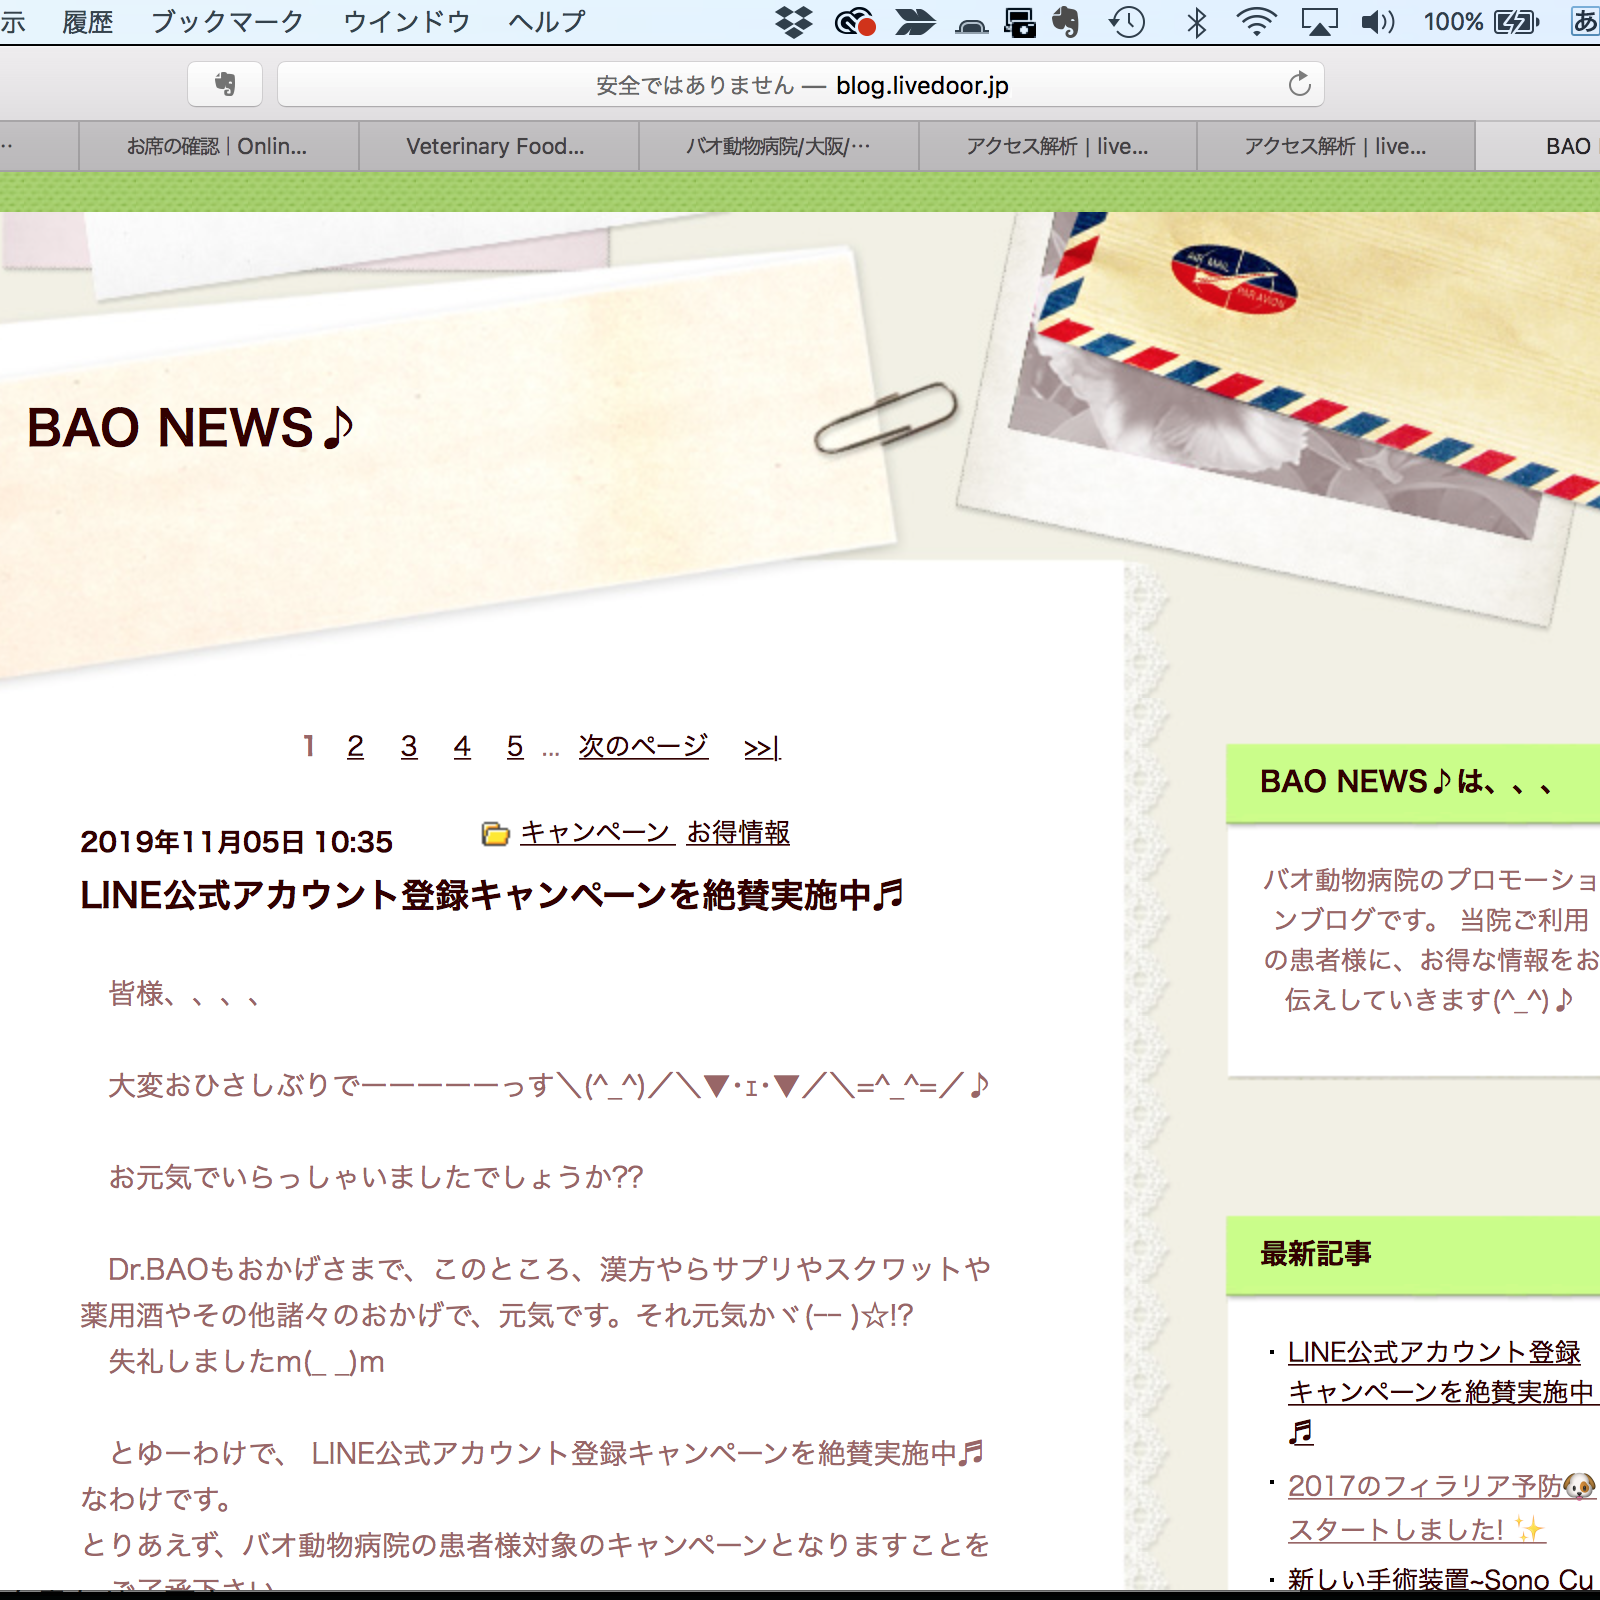 BAO NEWS♪のページ